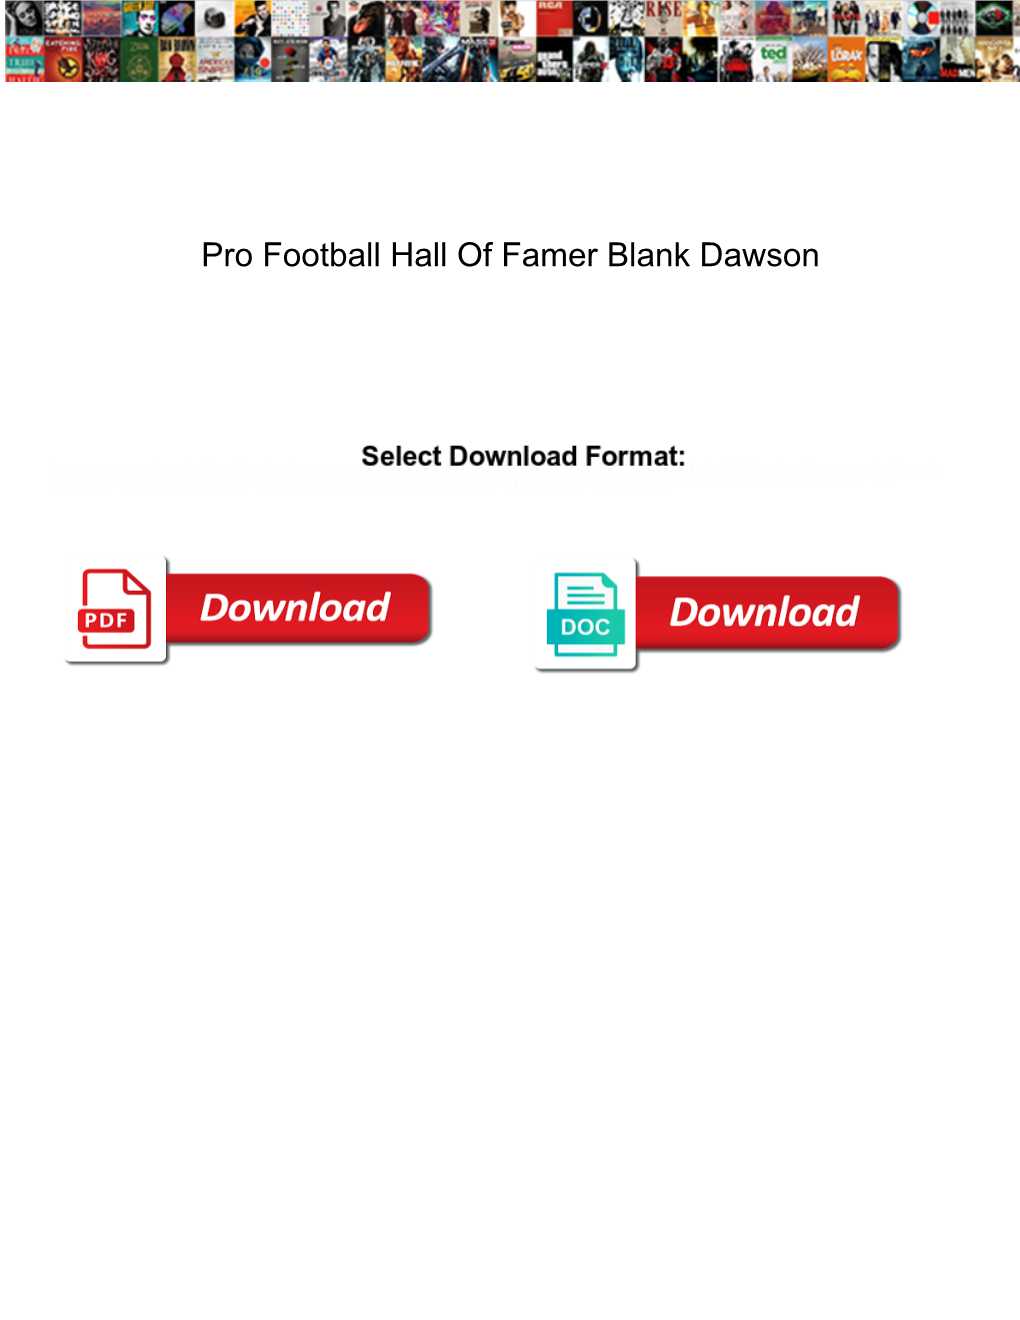 Pro Football Hall of Famer Blank Dawson